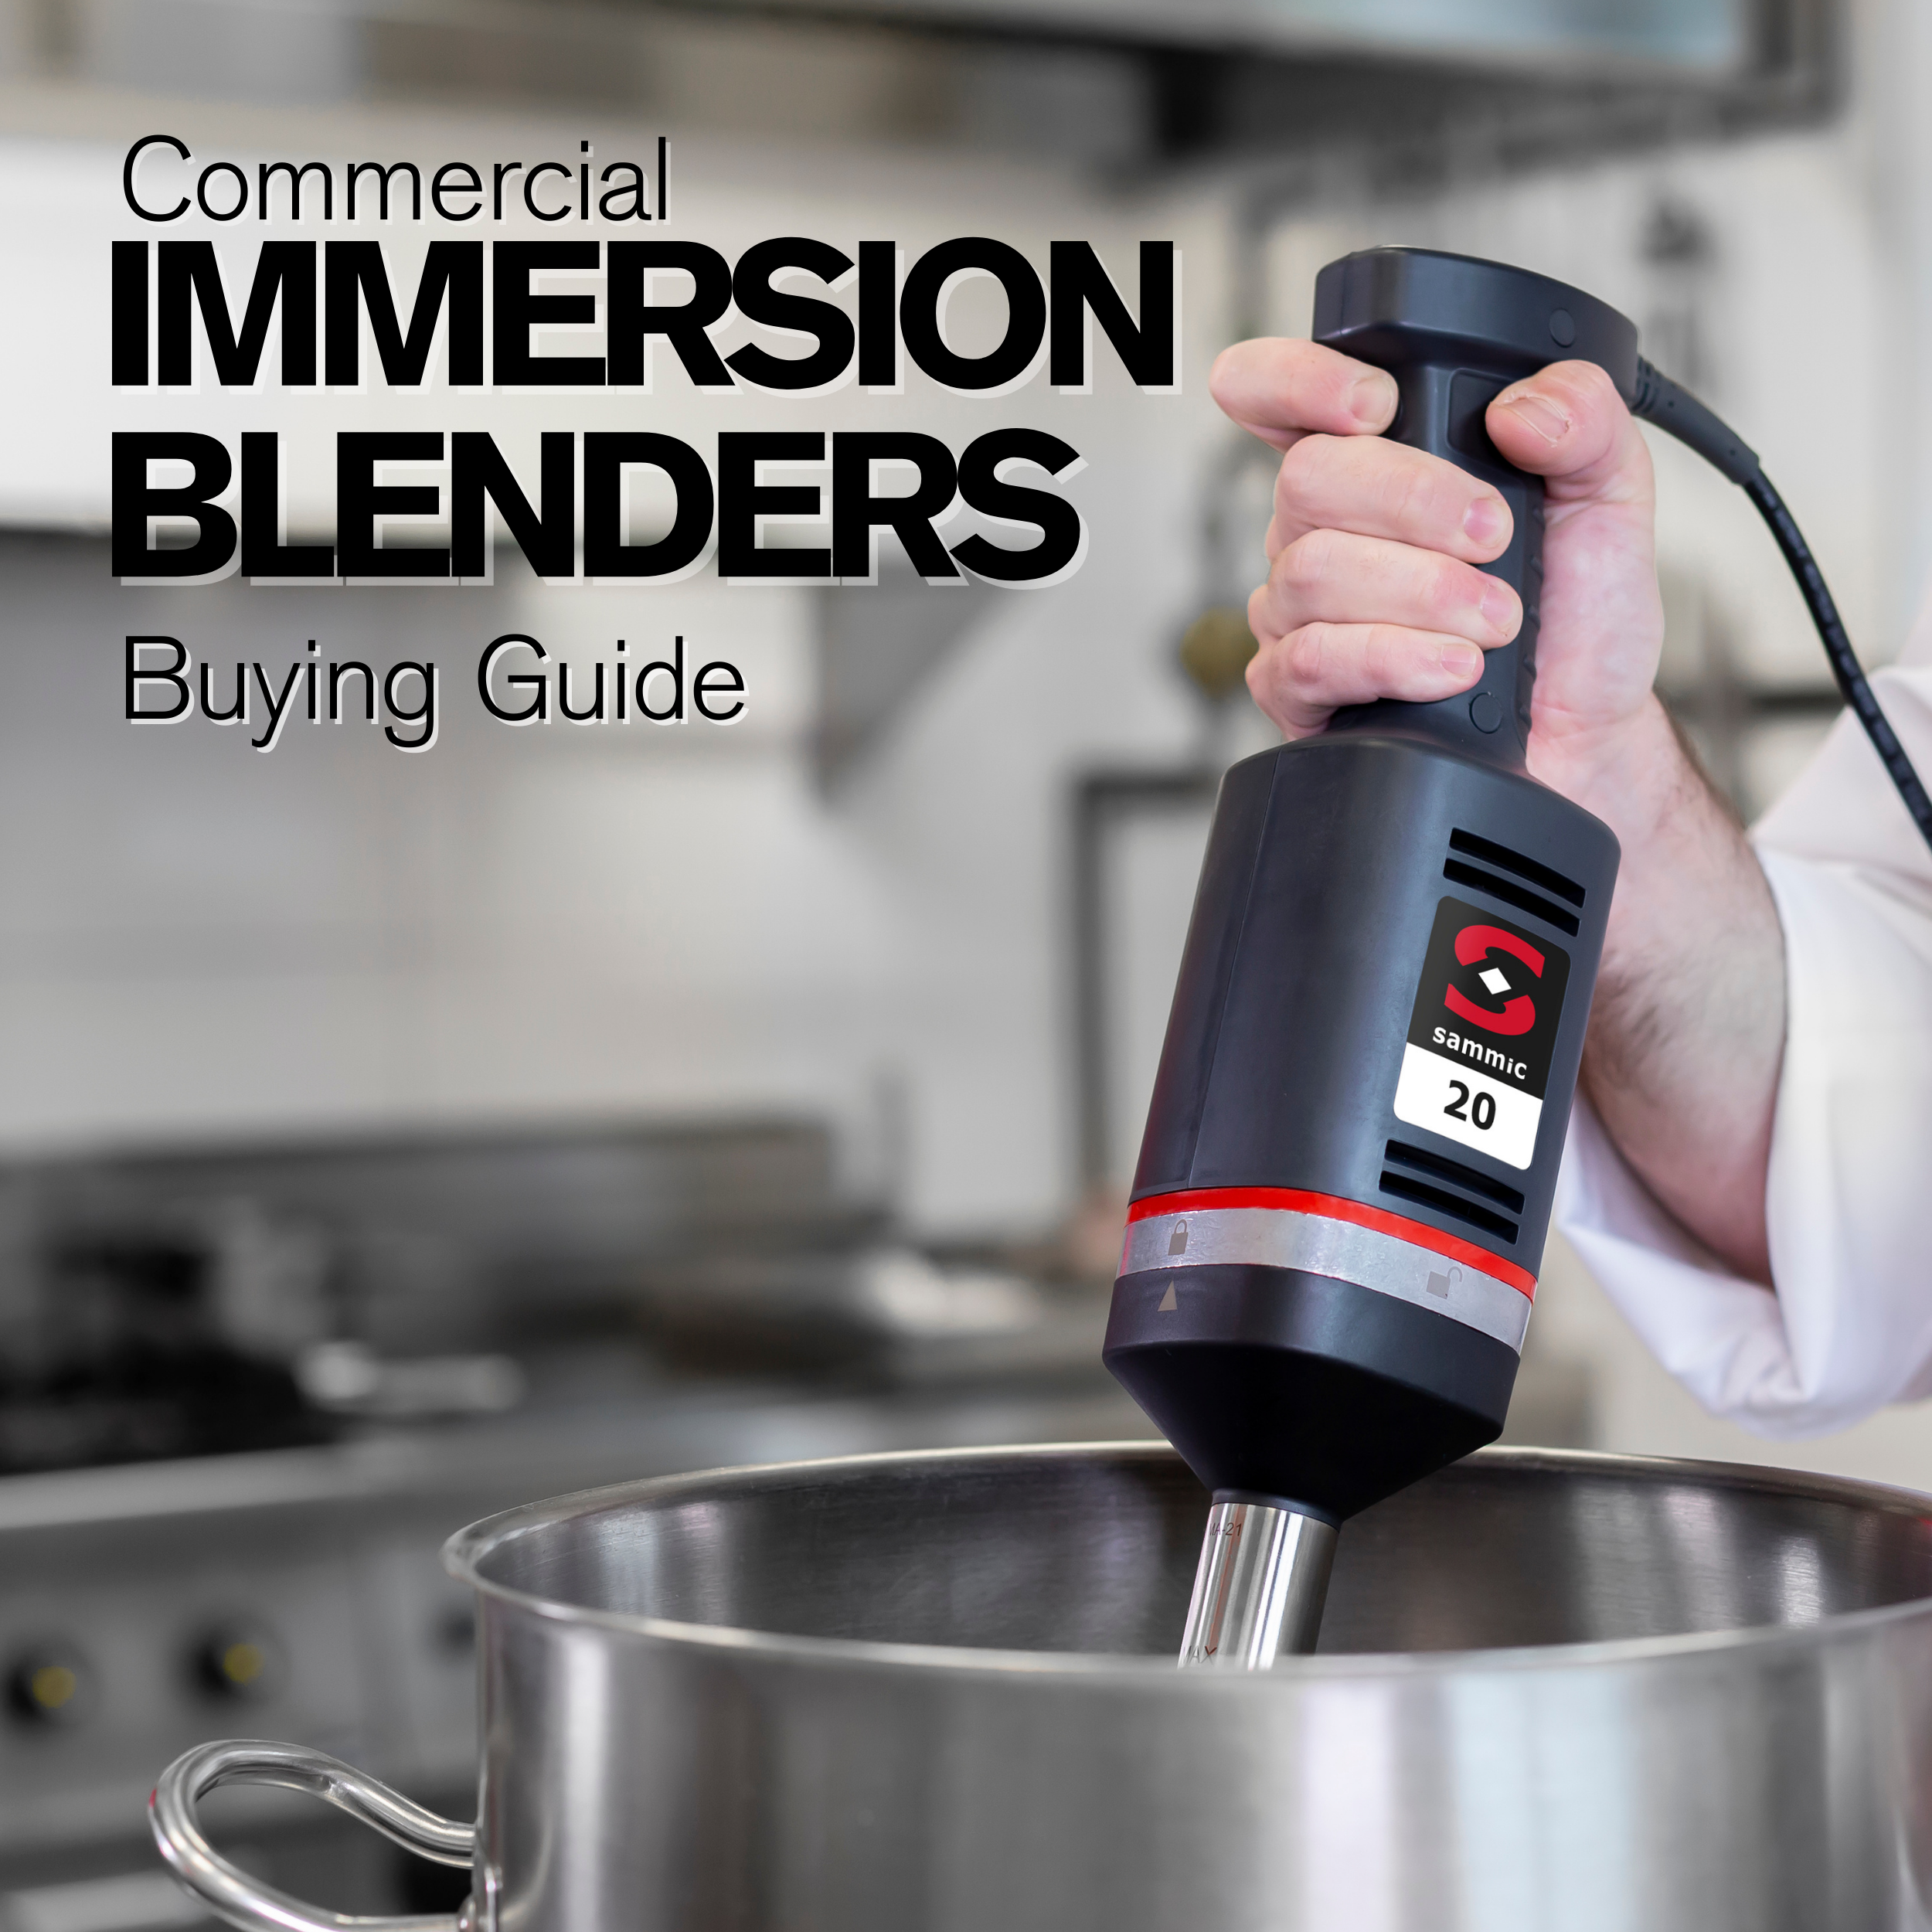 Commercial Immersion Blenders: 4 Benefits for Restaurants